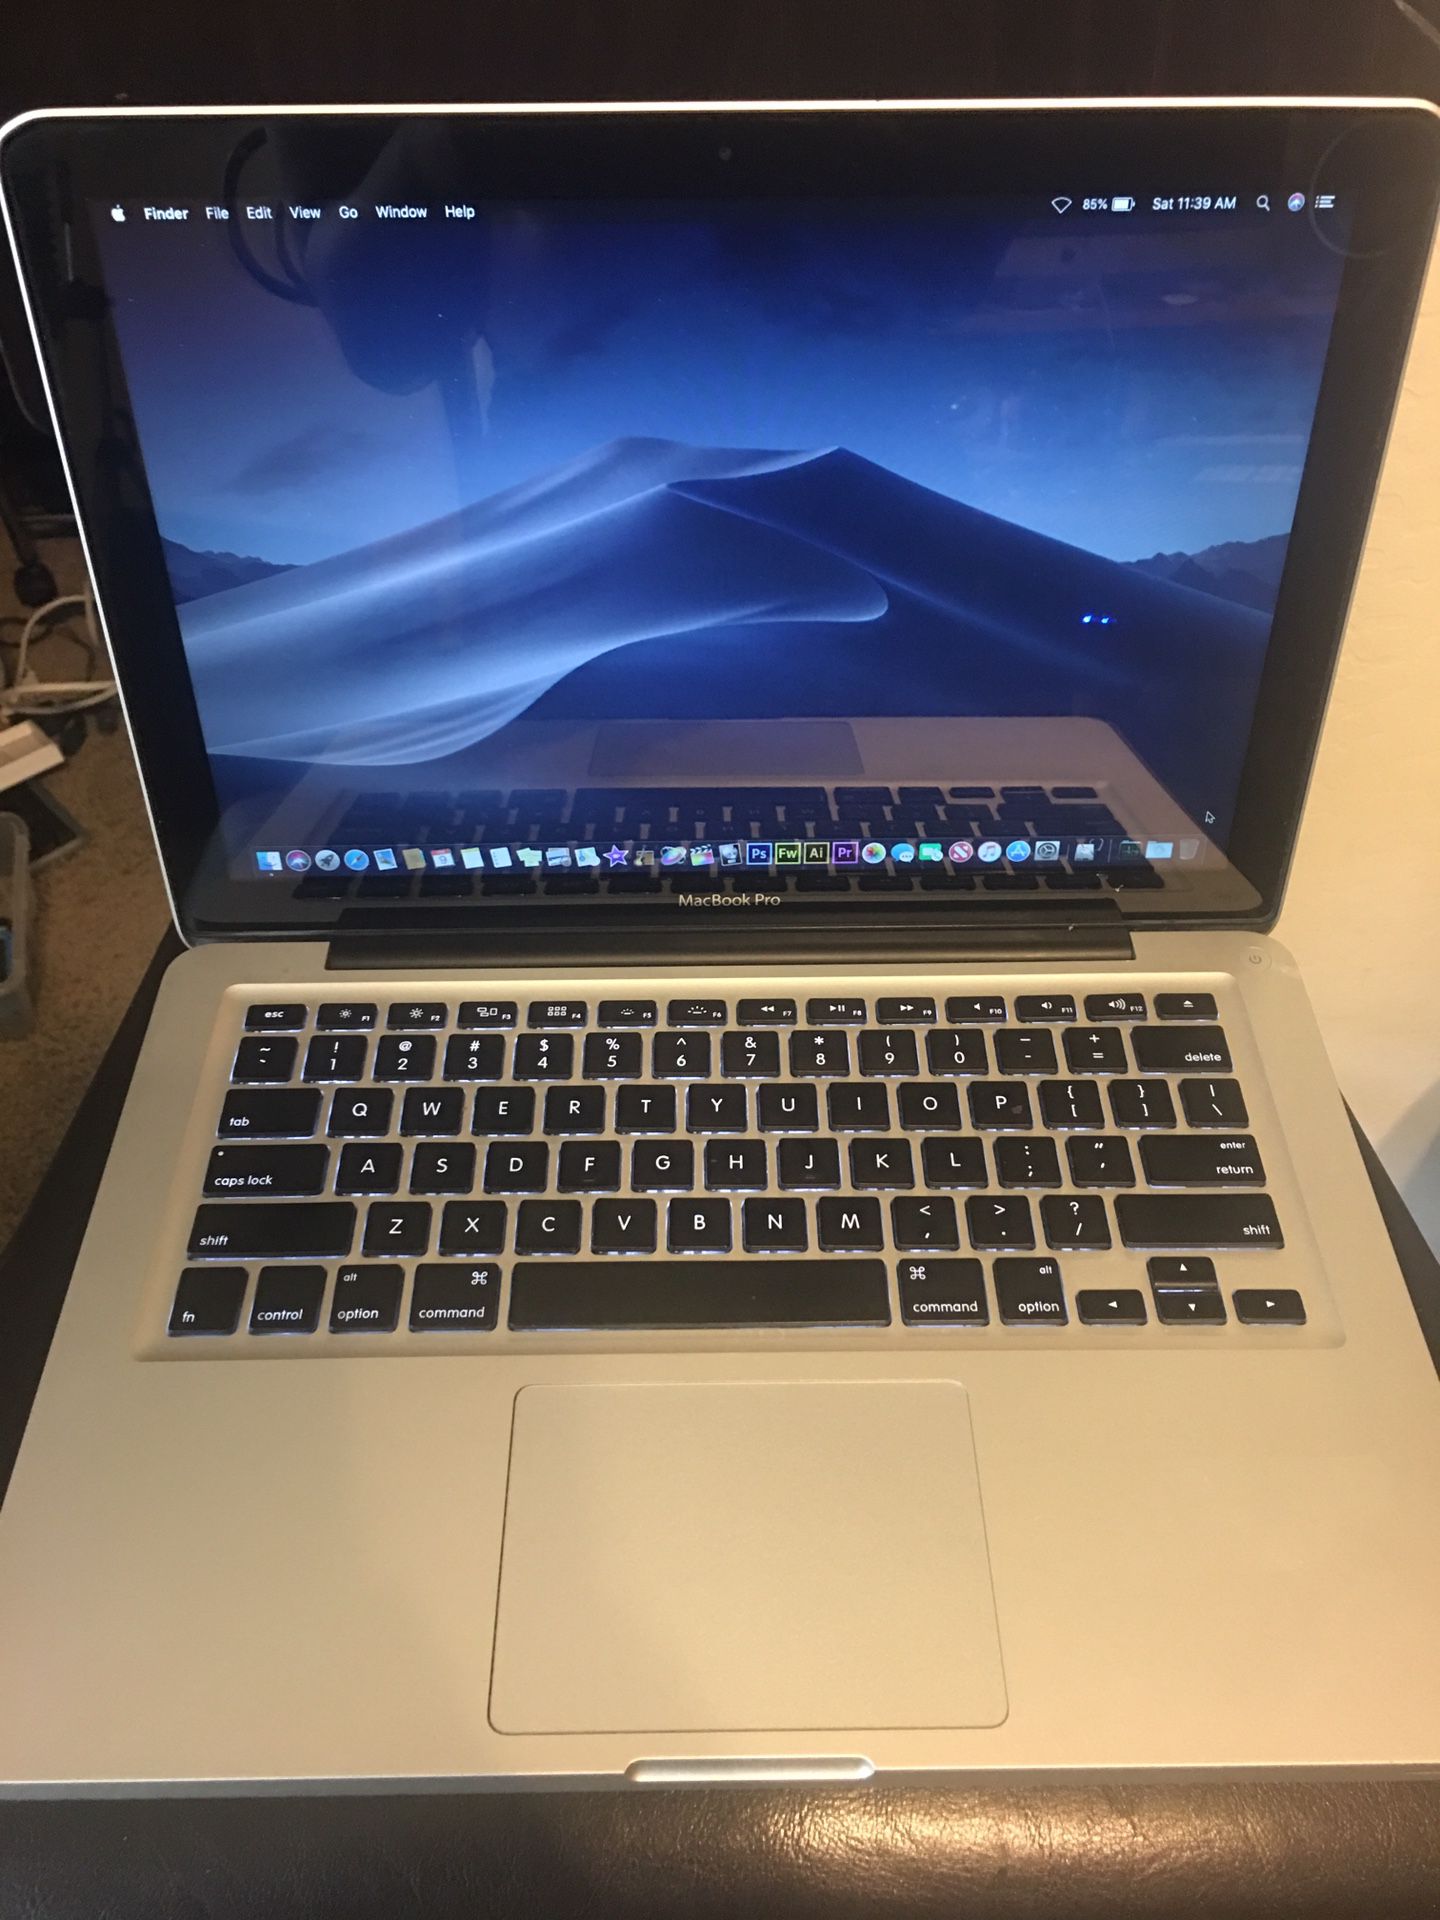 13 inch MacBook Pro 2012 ssd 256g hd with Final Cut Pro/logic pro x /cs3 adobe master suite